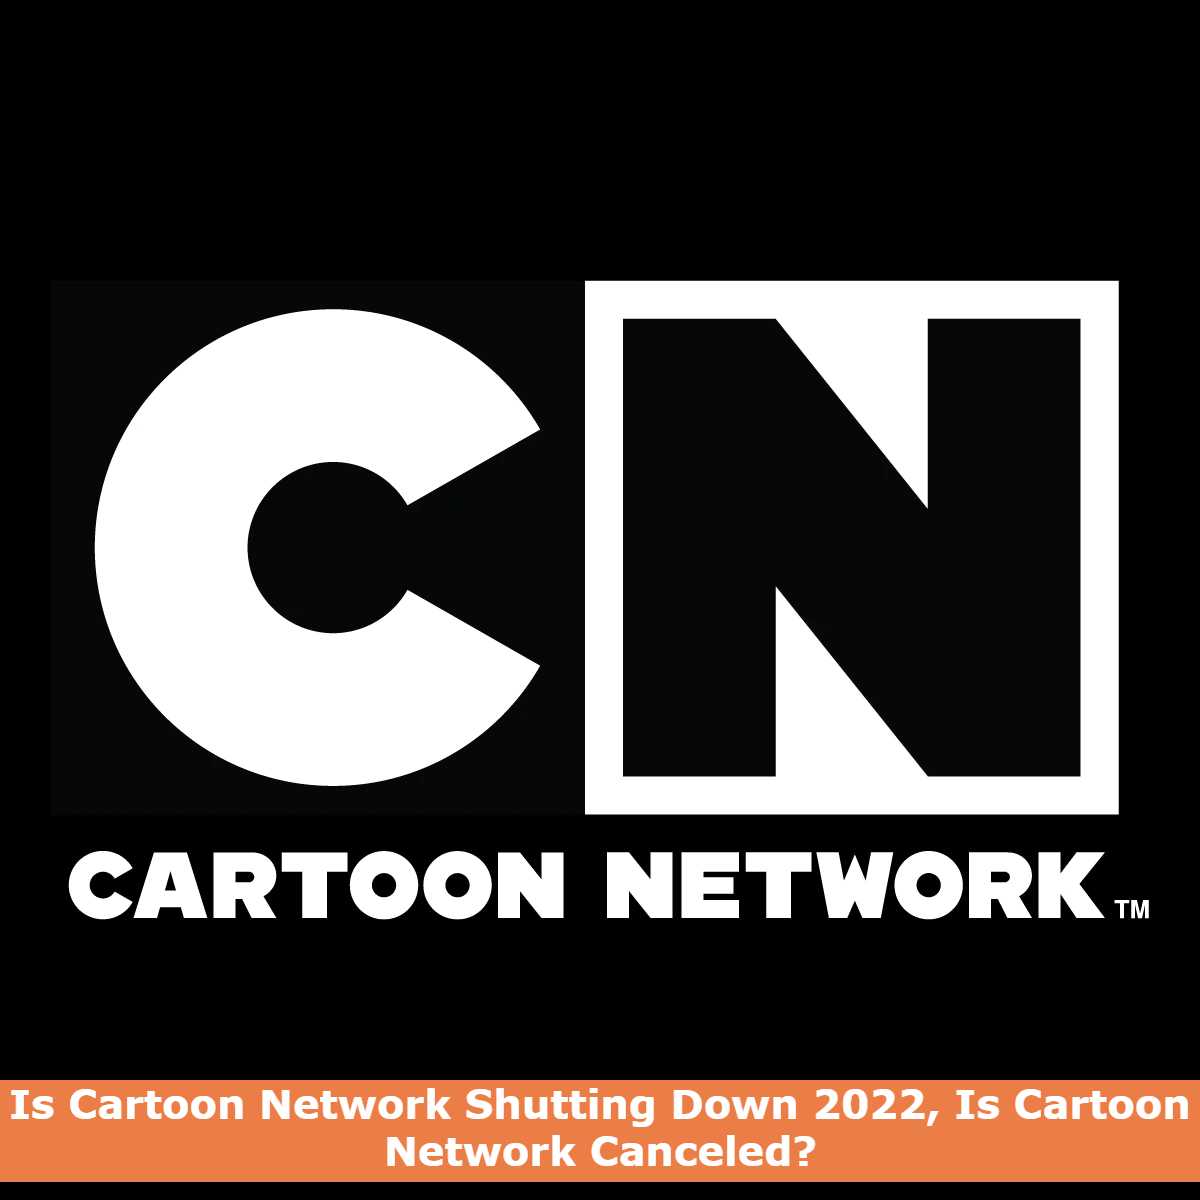 Is Cartoon Network Shutting Down 2022, Is Cartoon Network Canceled?